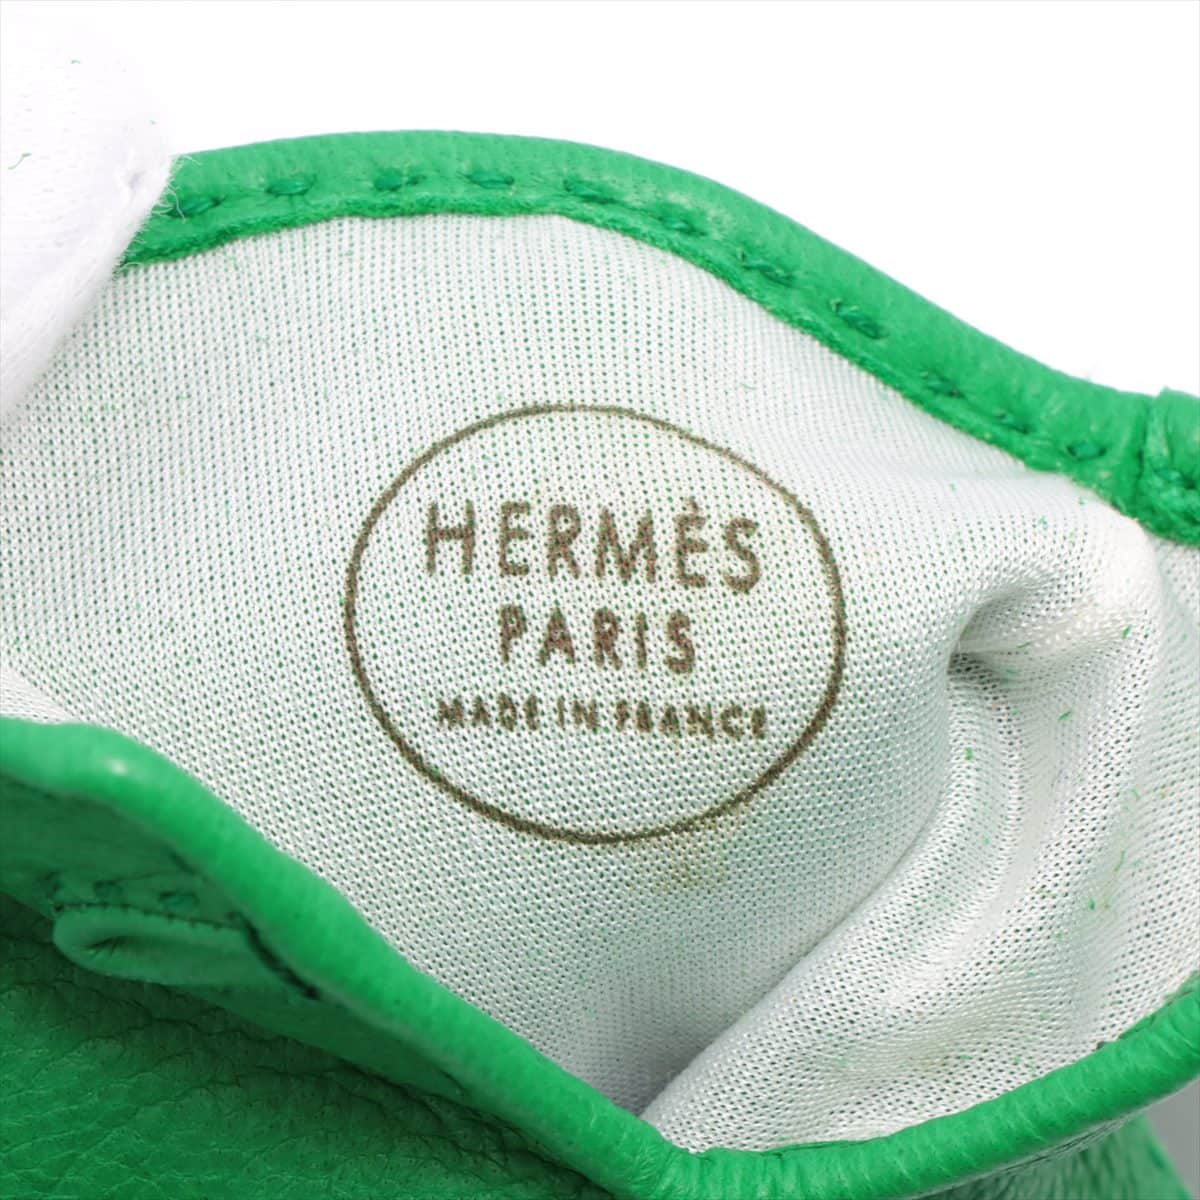 Hermès Serie Grove Leather Green